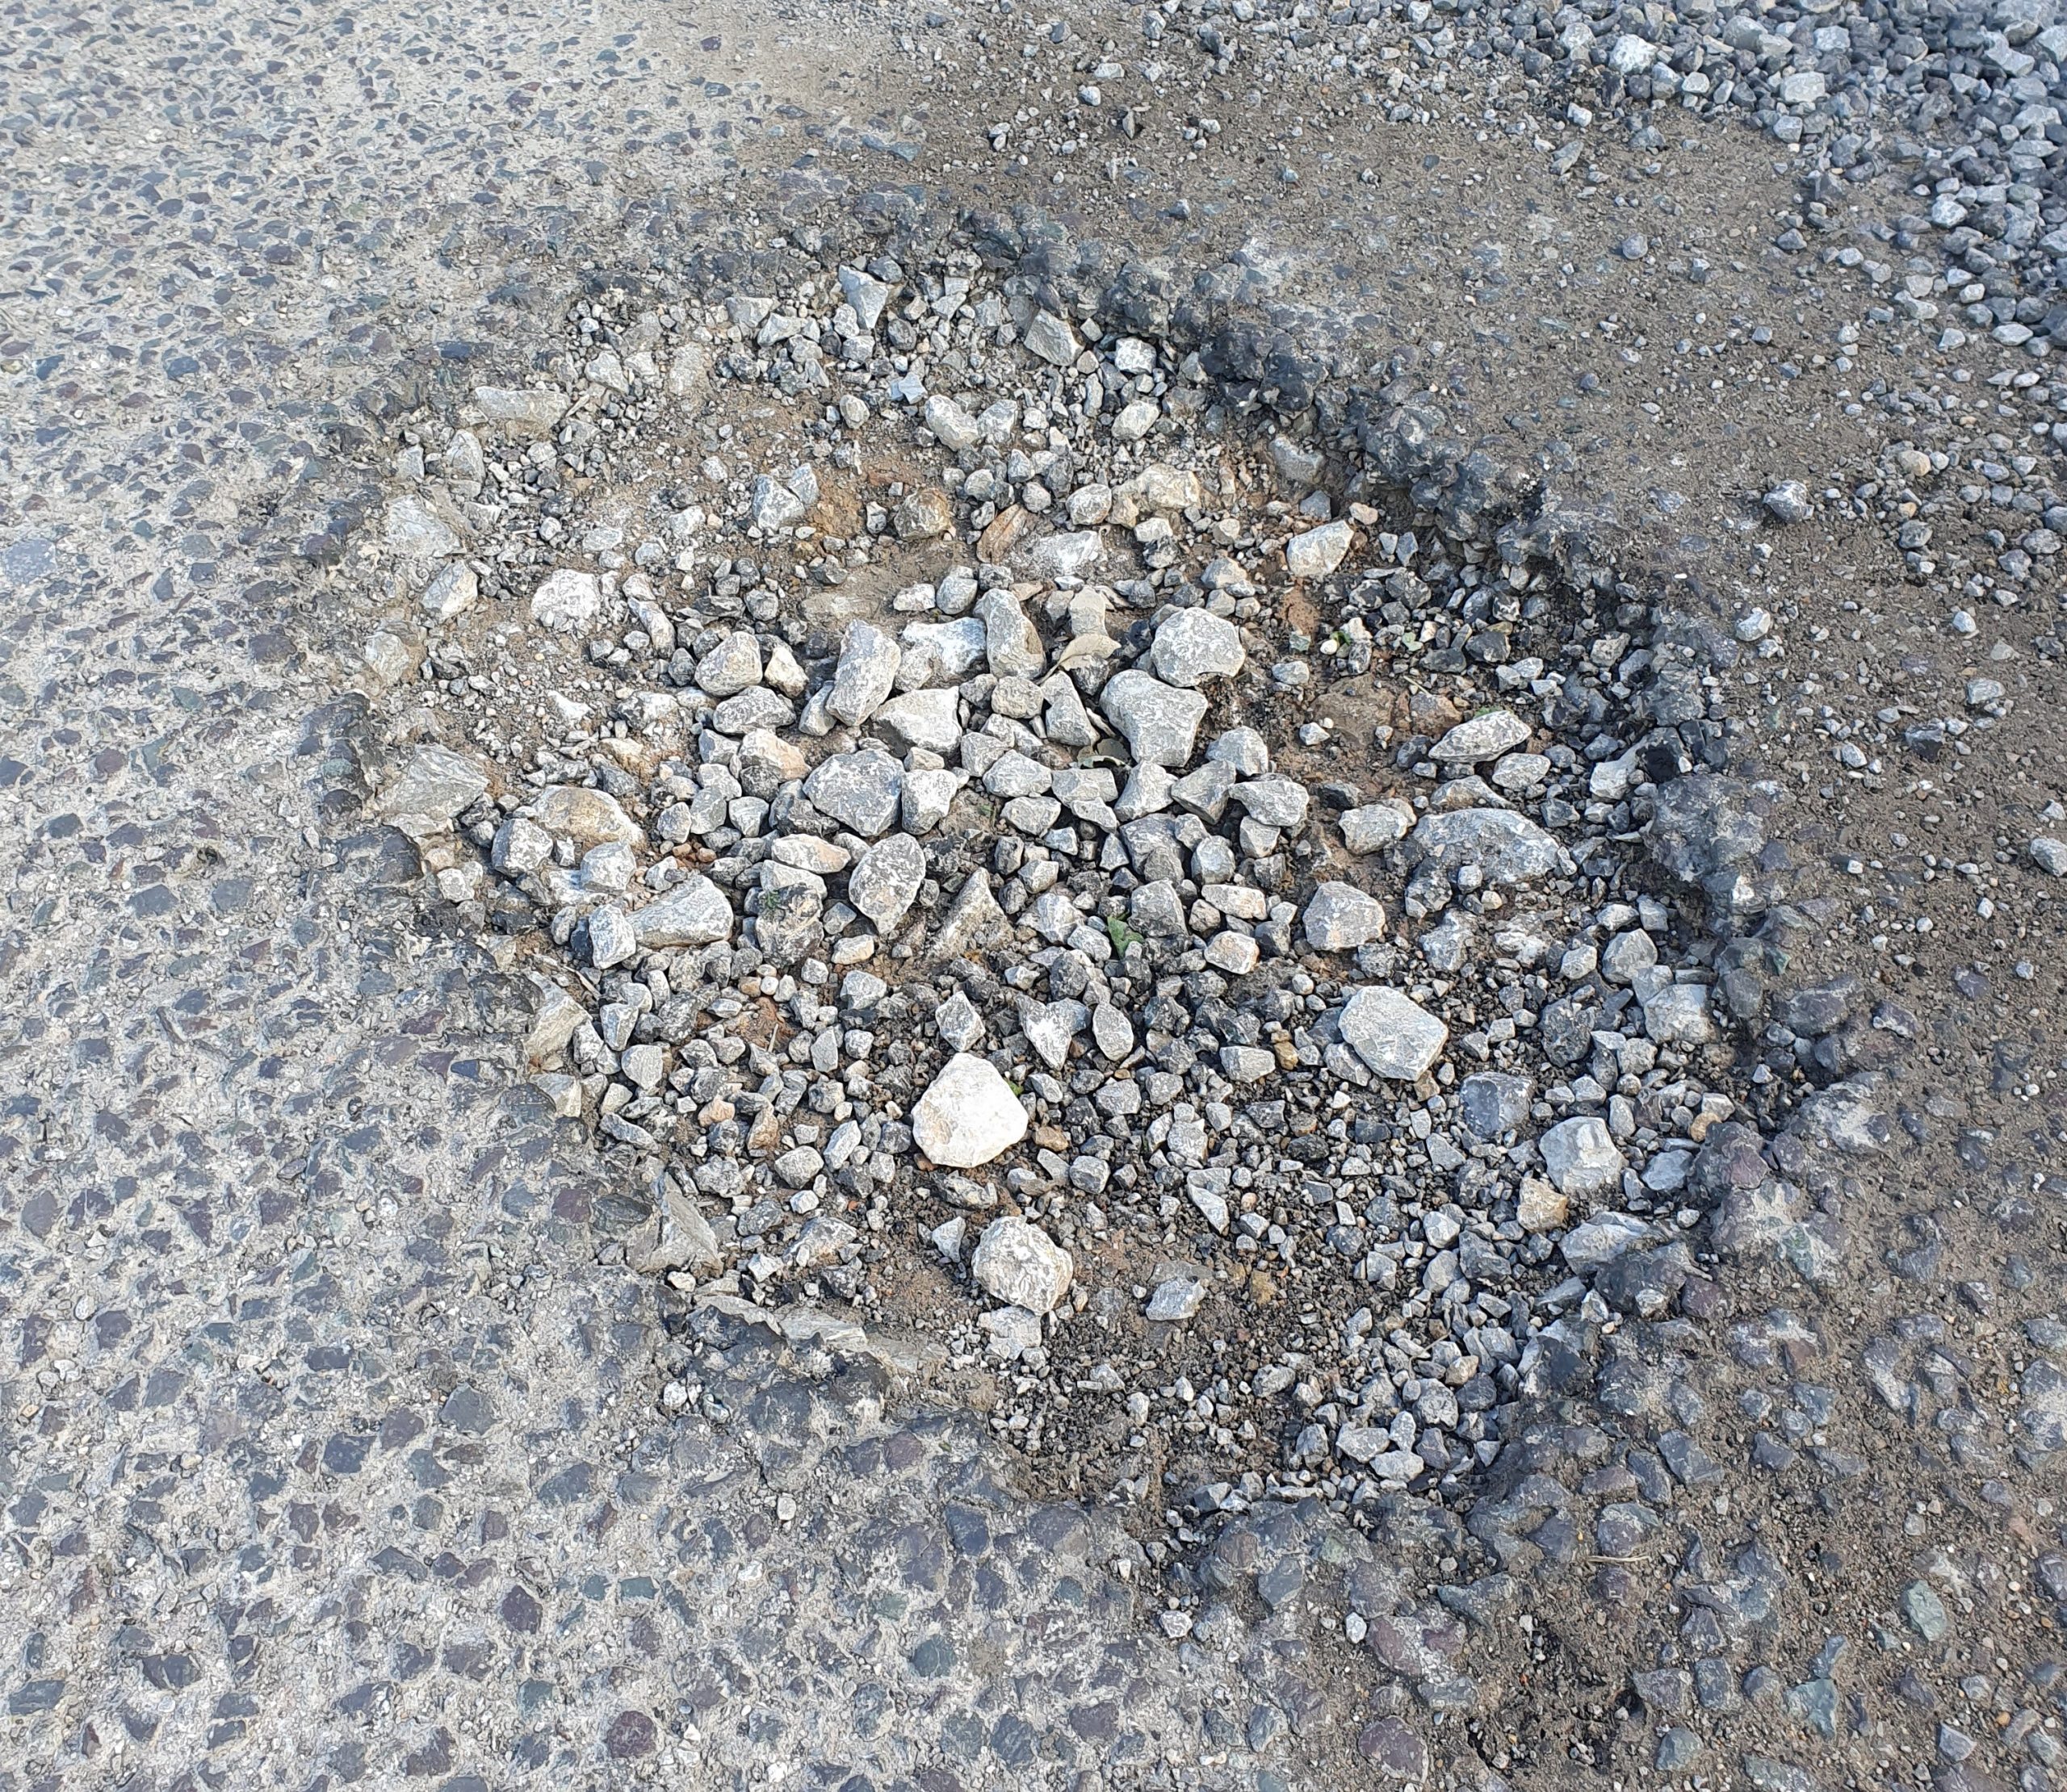 Severn Road Pothole